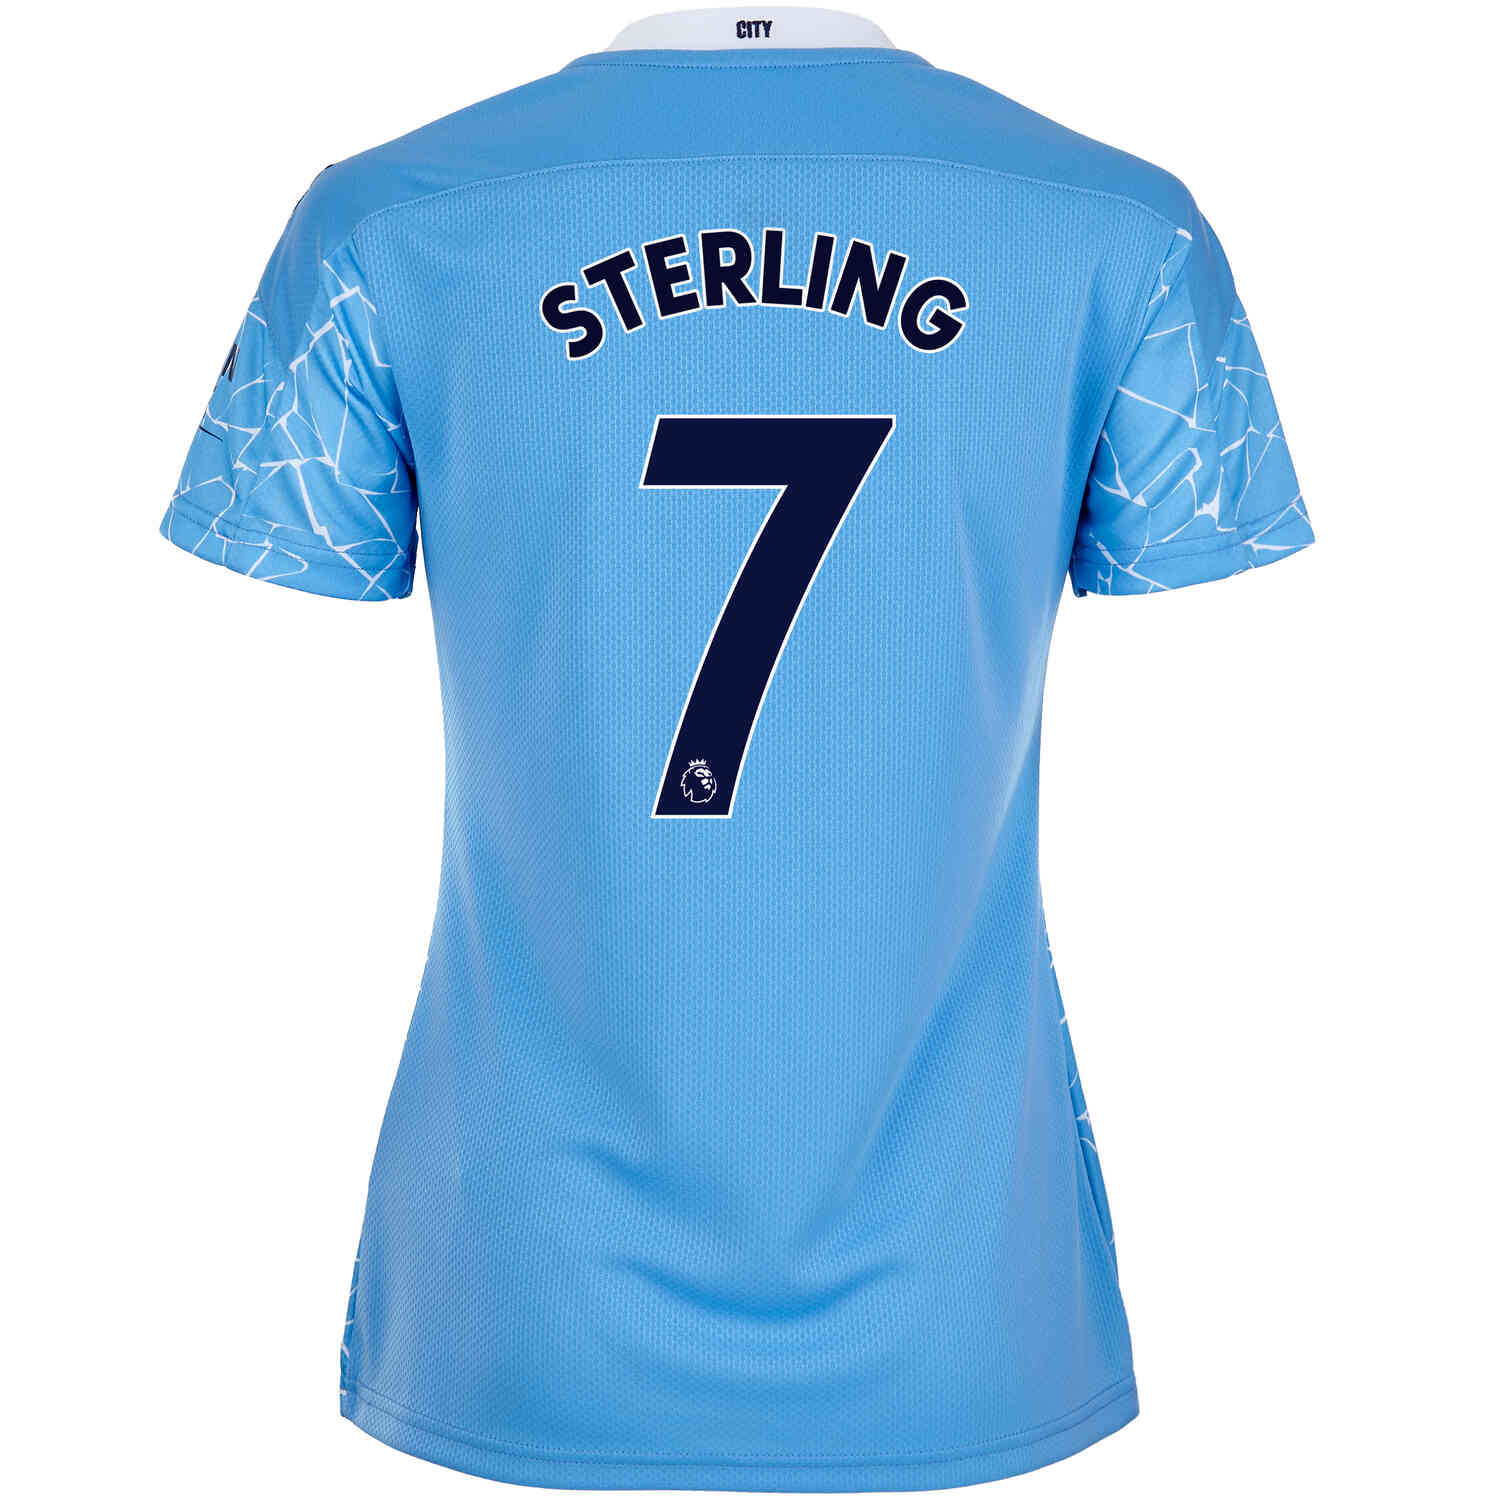 raheem sterling jersey number